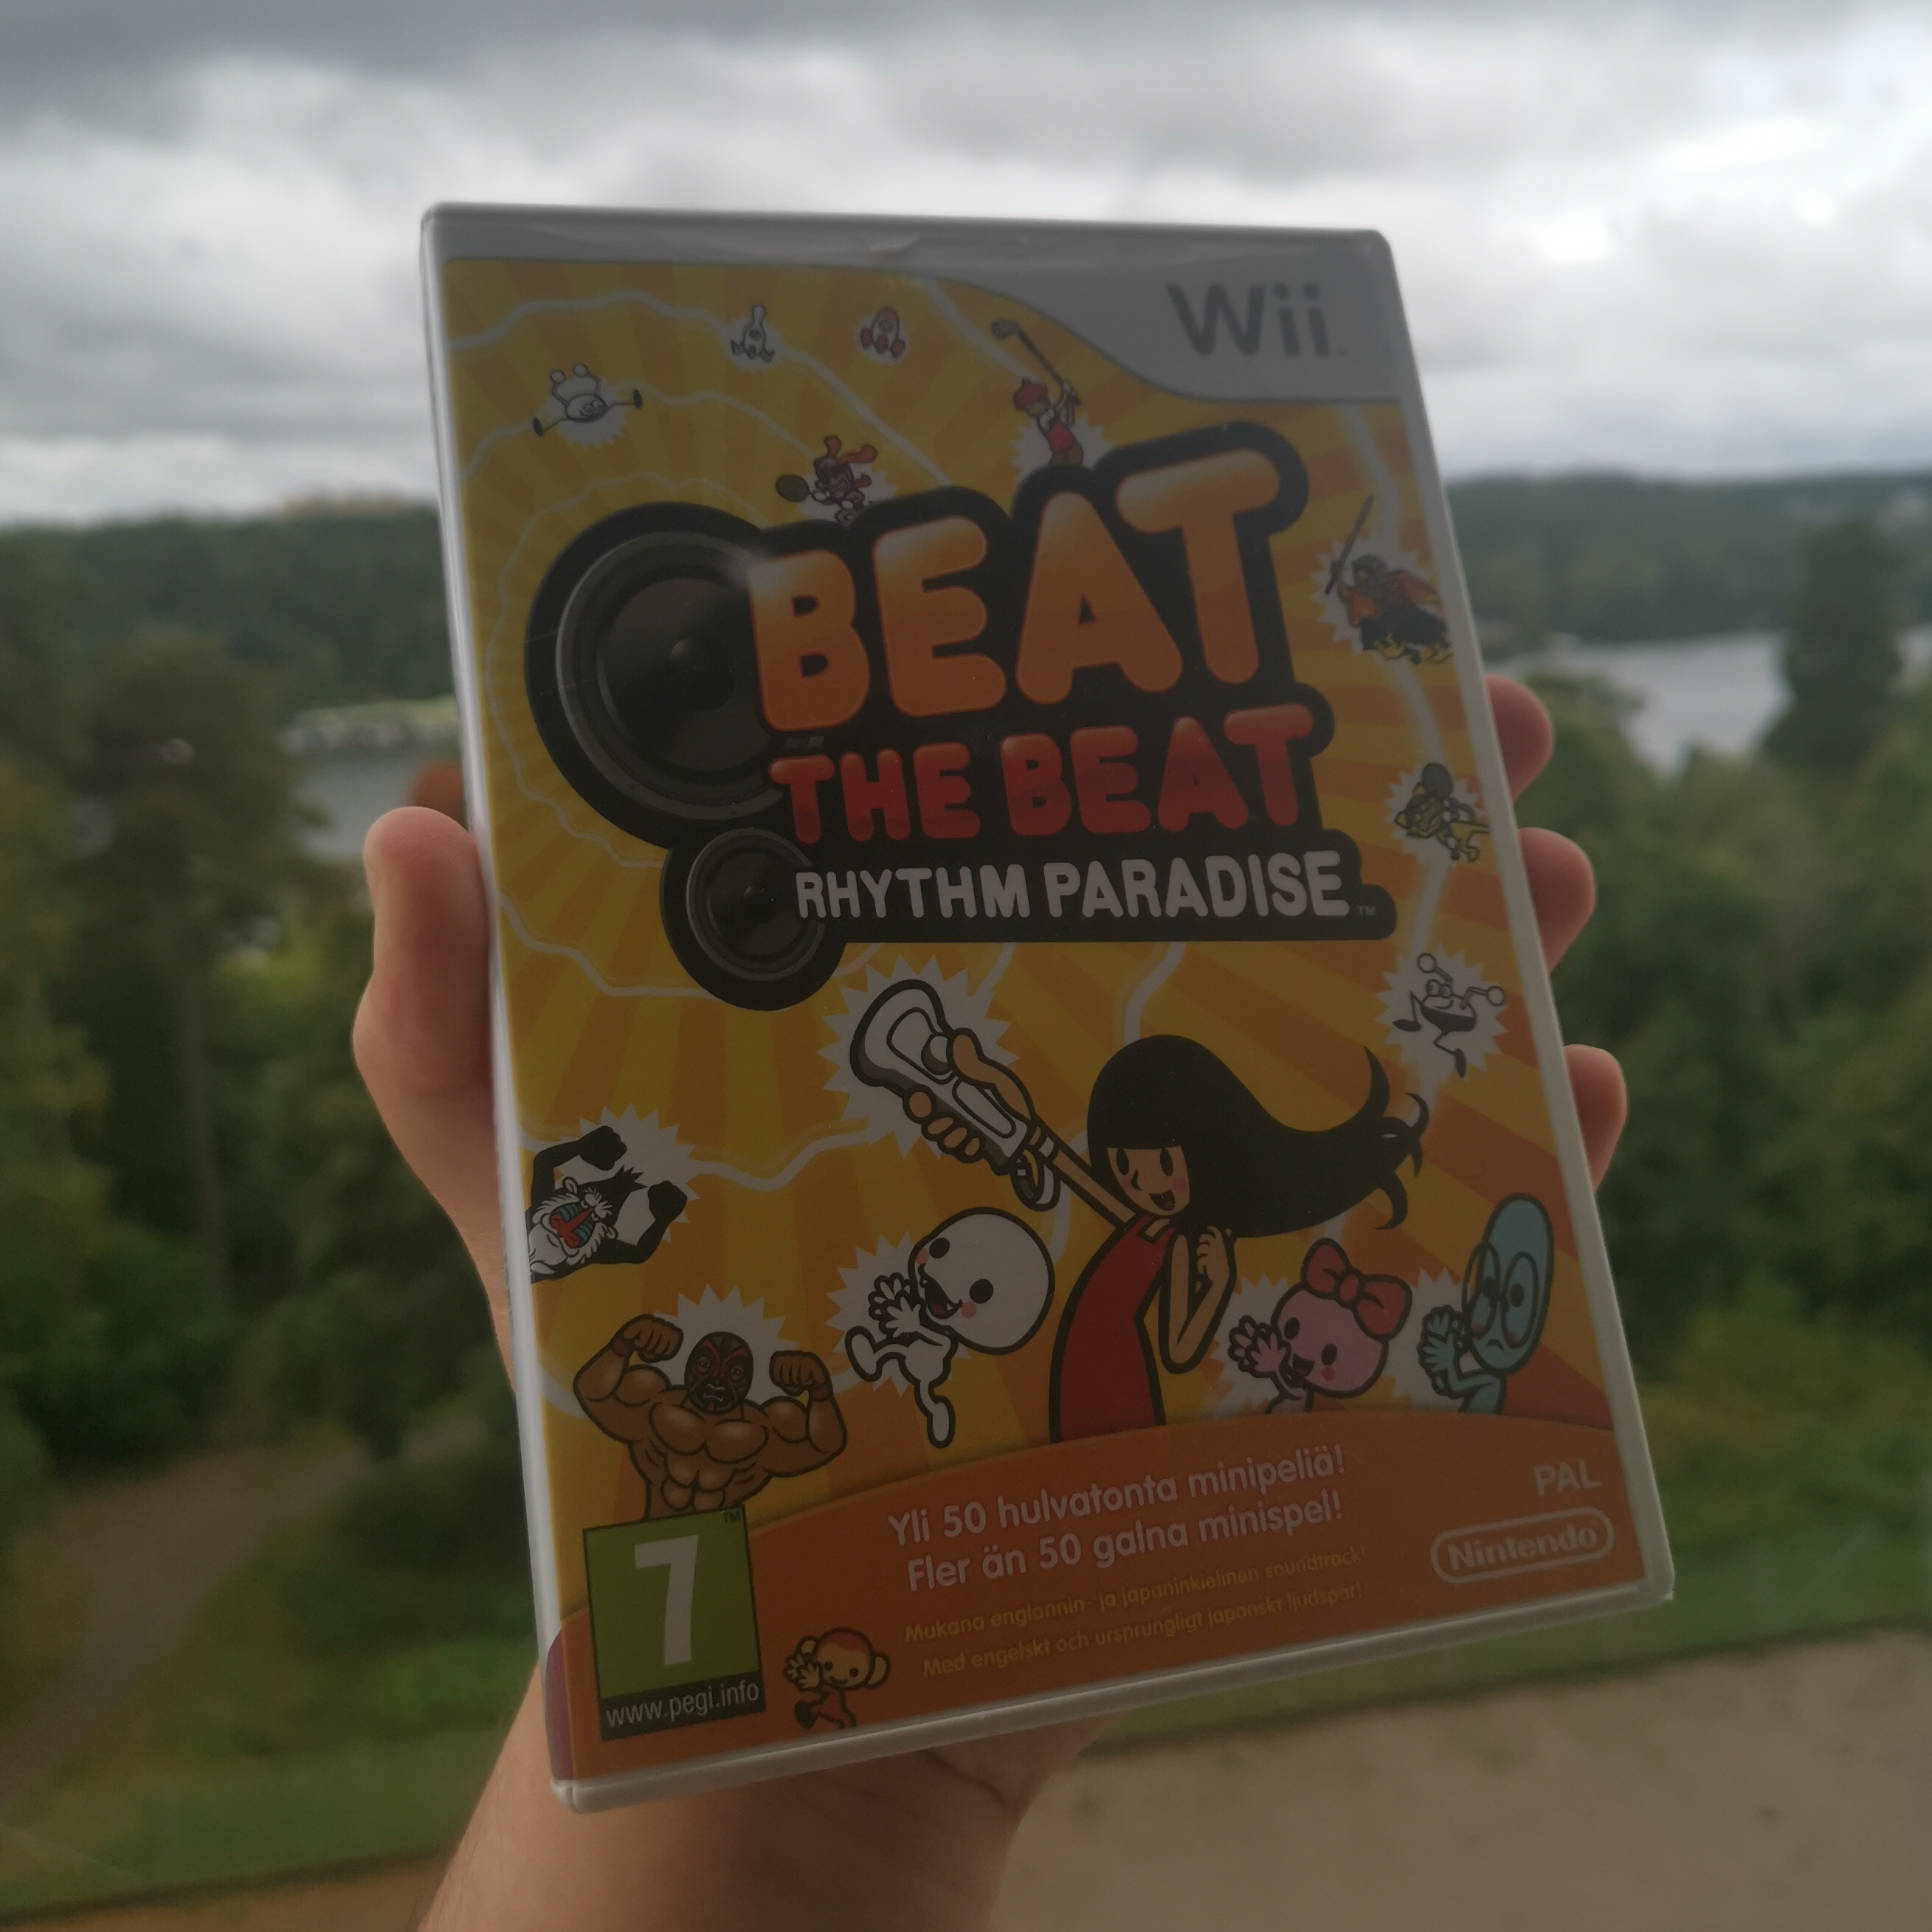 me holding my copy of beat the beat rhythm paradise on my balcony